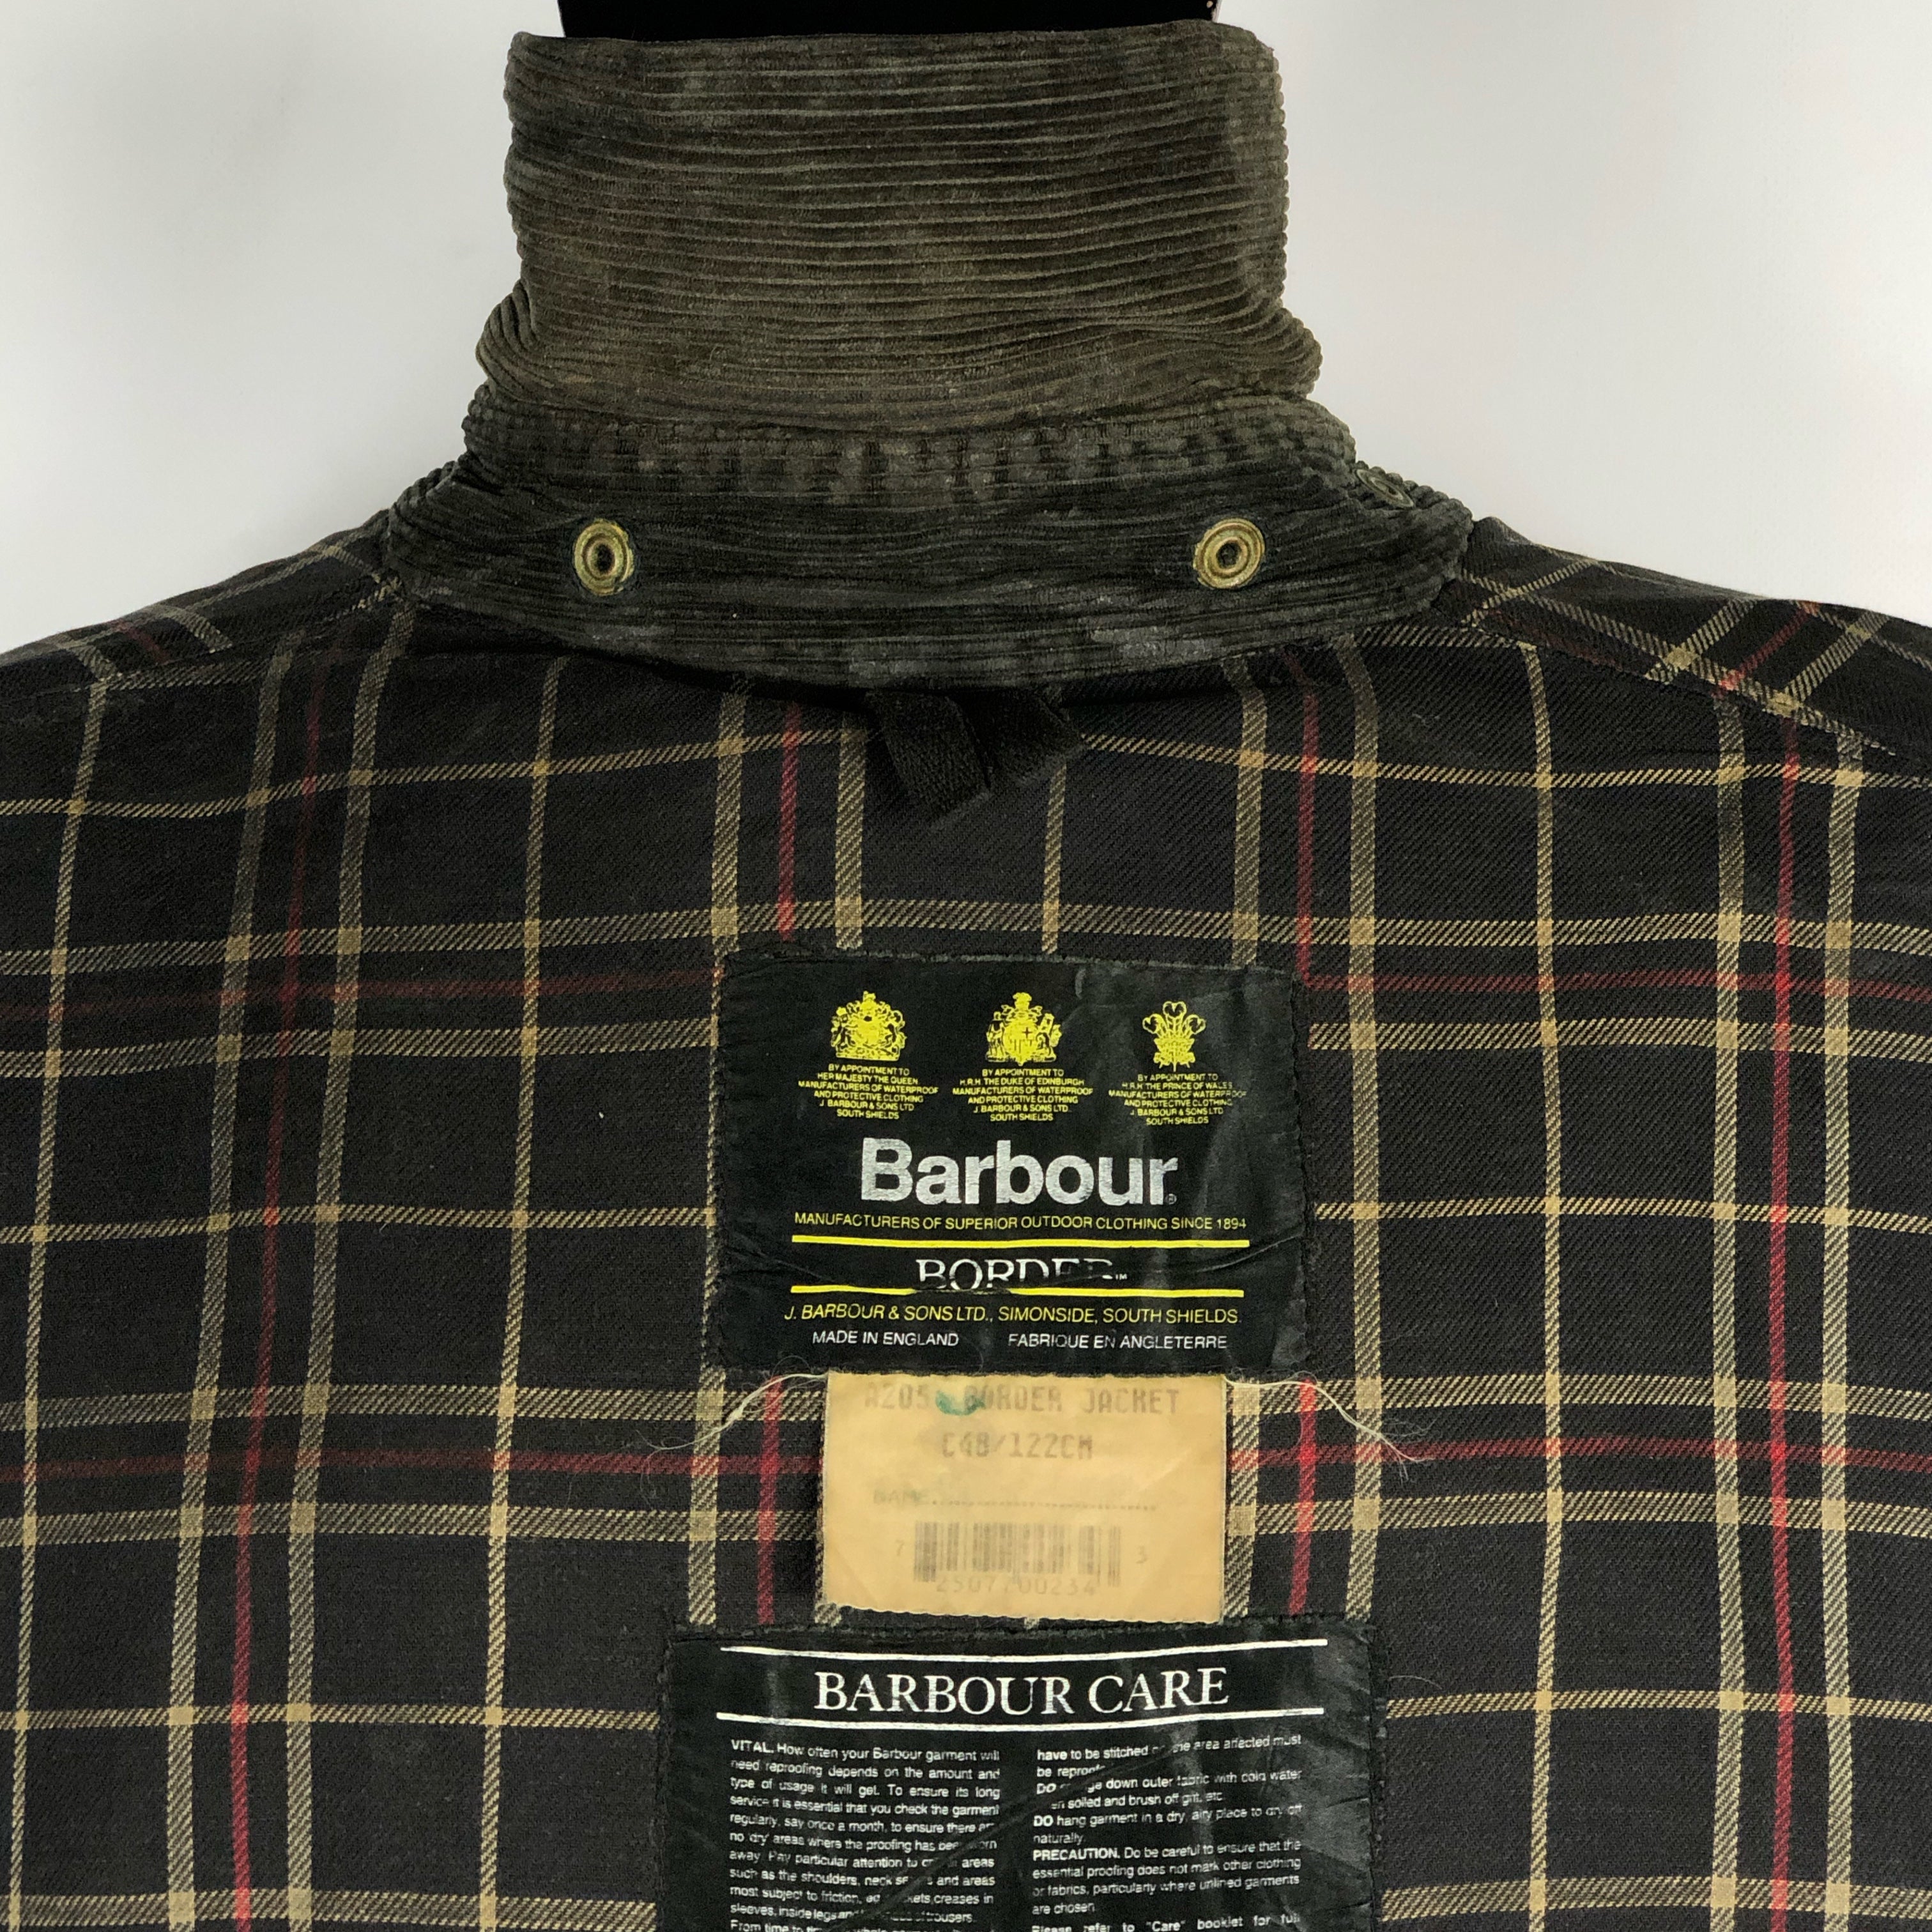 Giacca Barbour Border Blu Vintage Uomo C48/122cm Navy wax jacket 